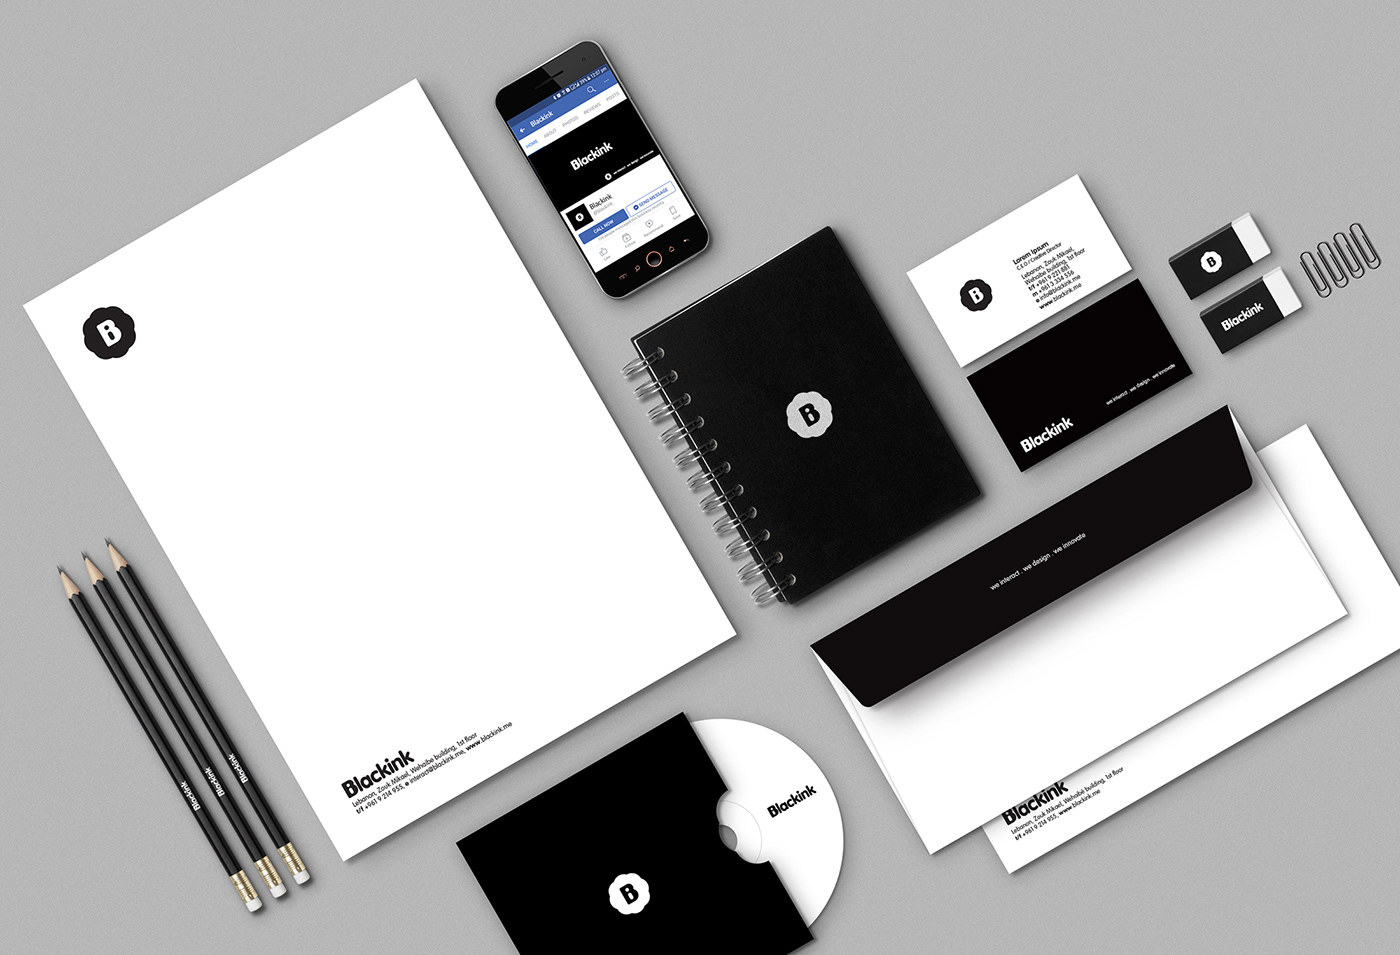 branding agency design house Corporate Identity ink black interact innovate Visual Communication logo identity business card letterhead envelope emblem